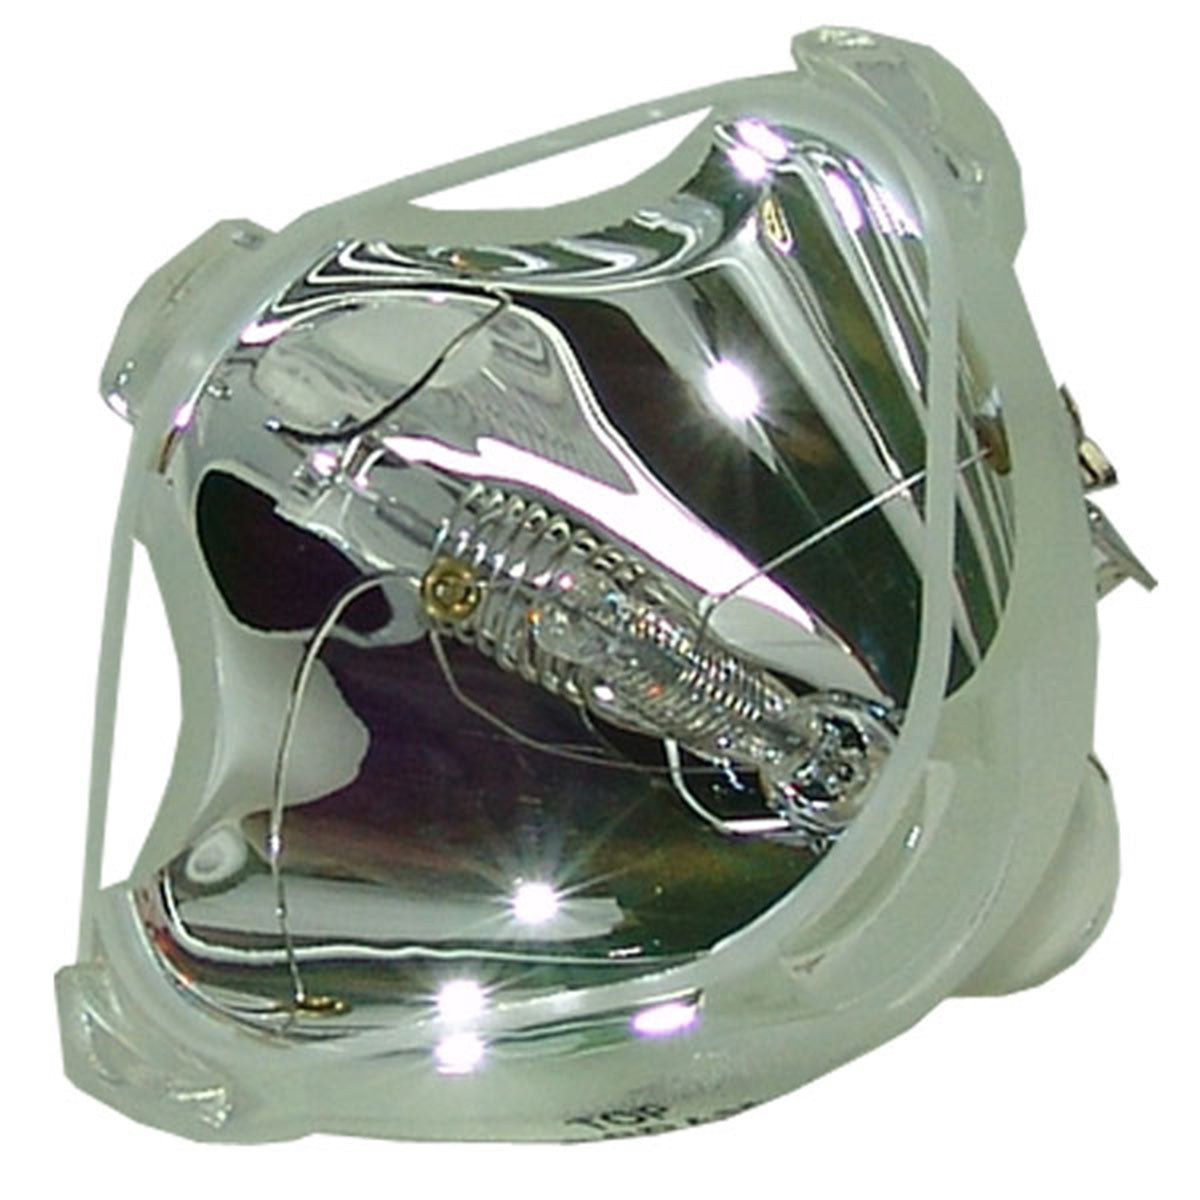 Philips LCA3111 Osram Projector Bare Lamp